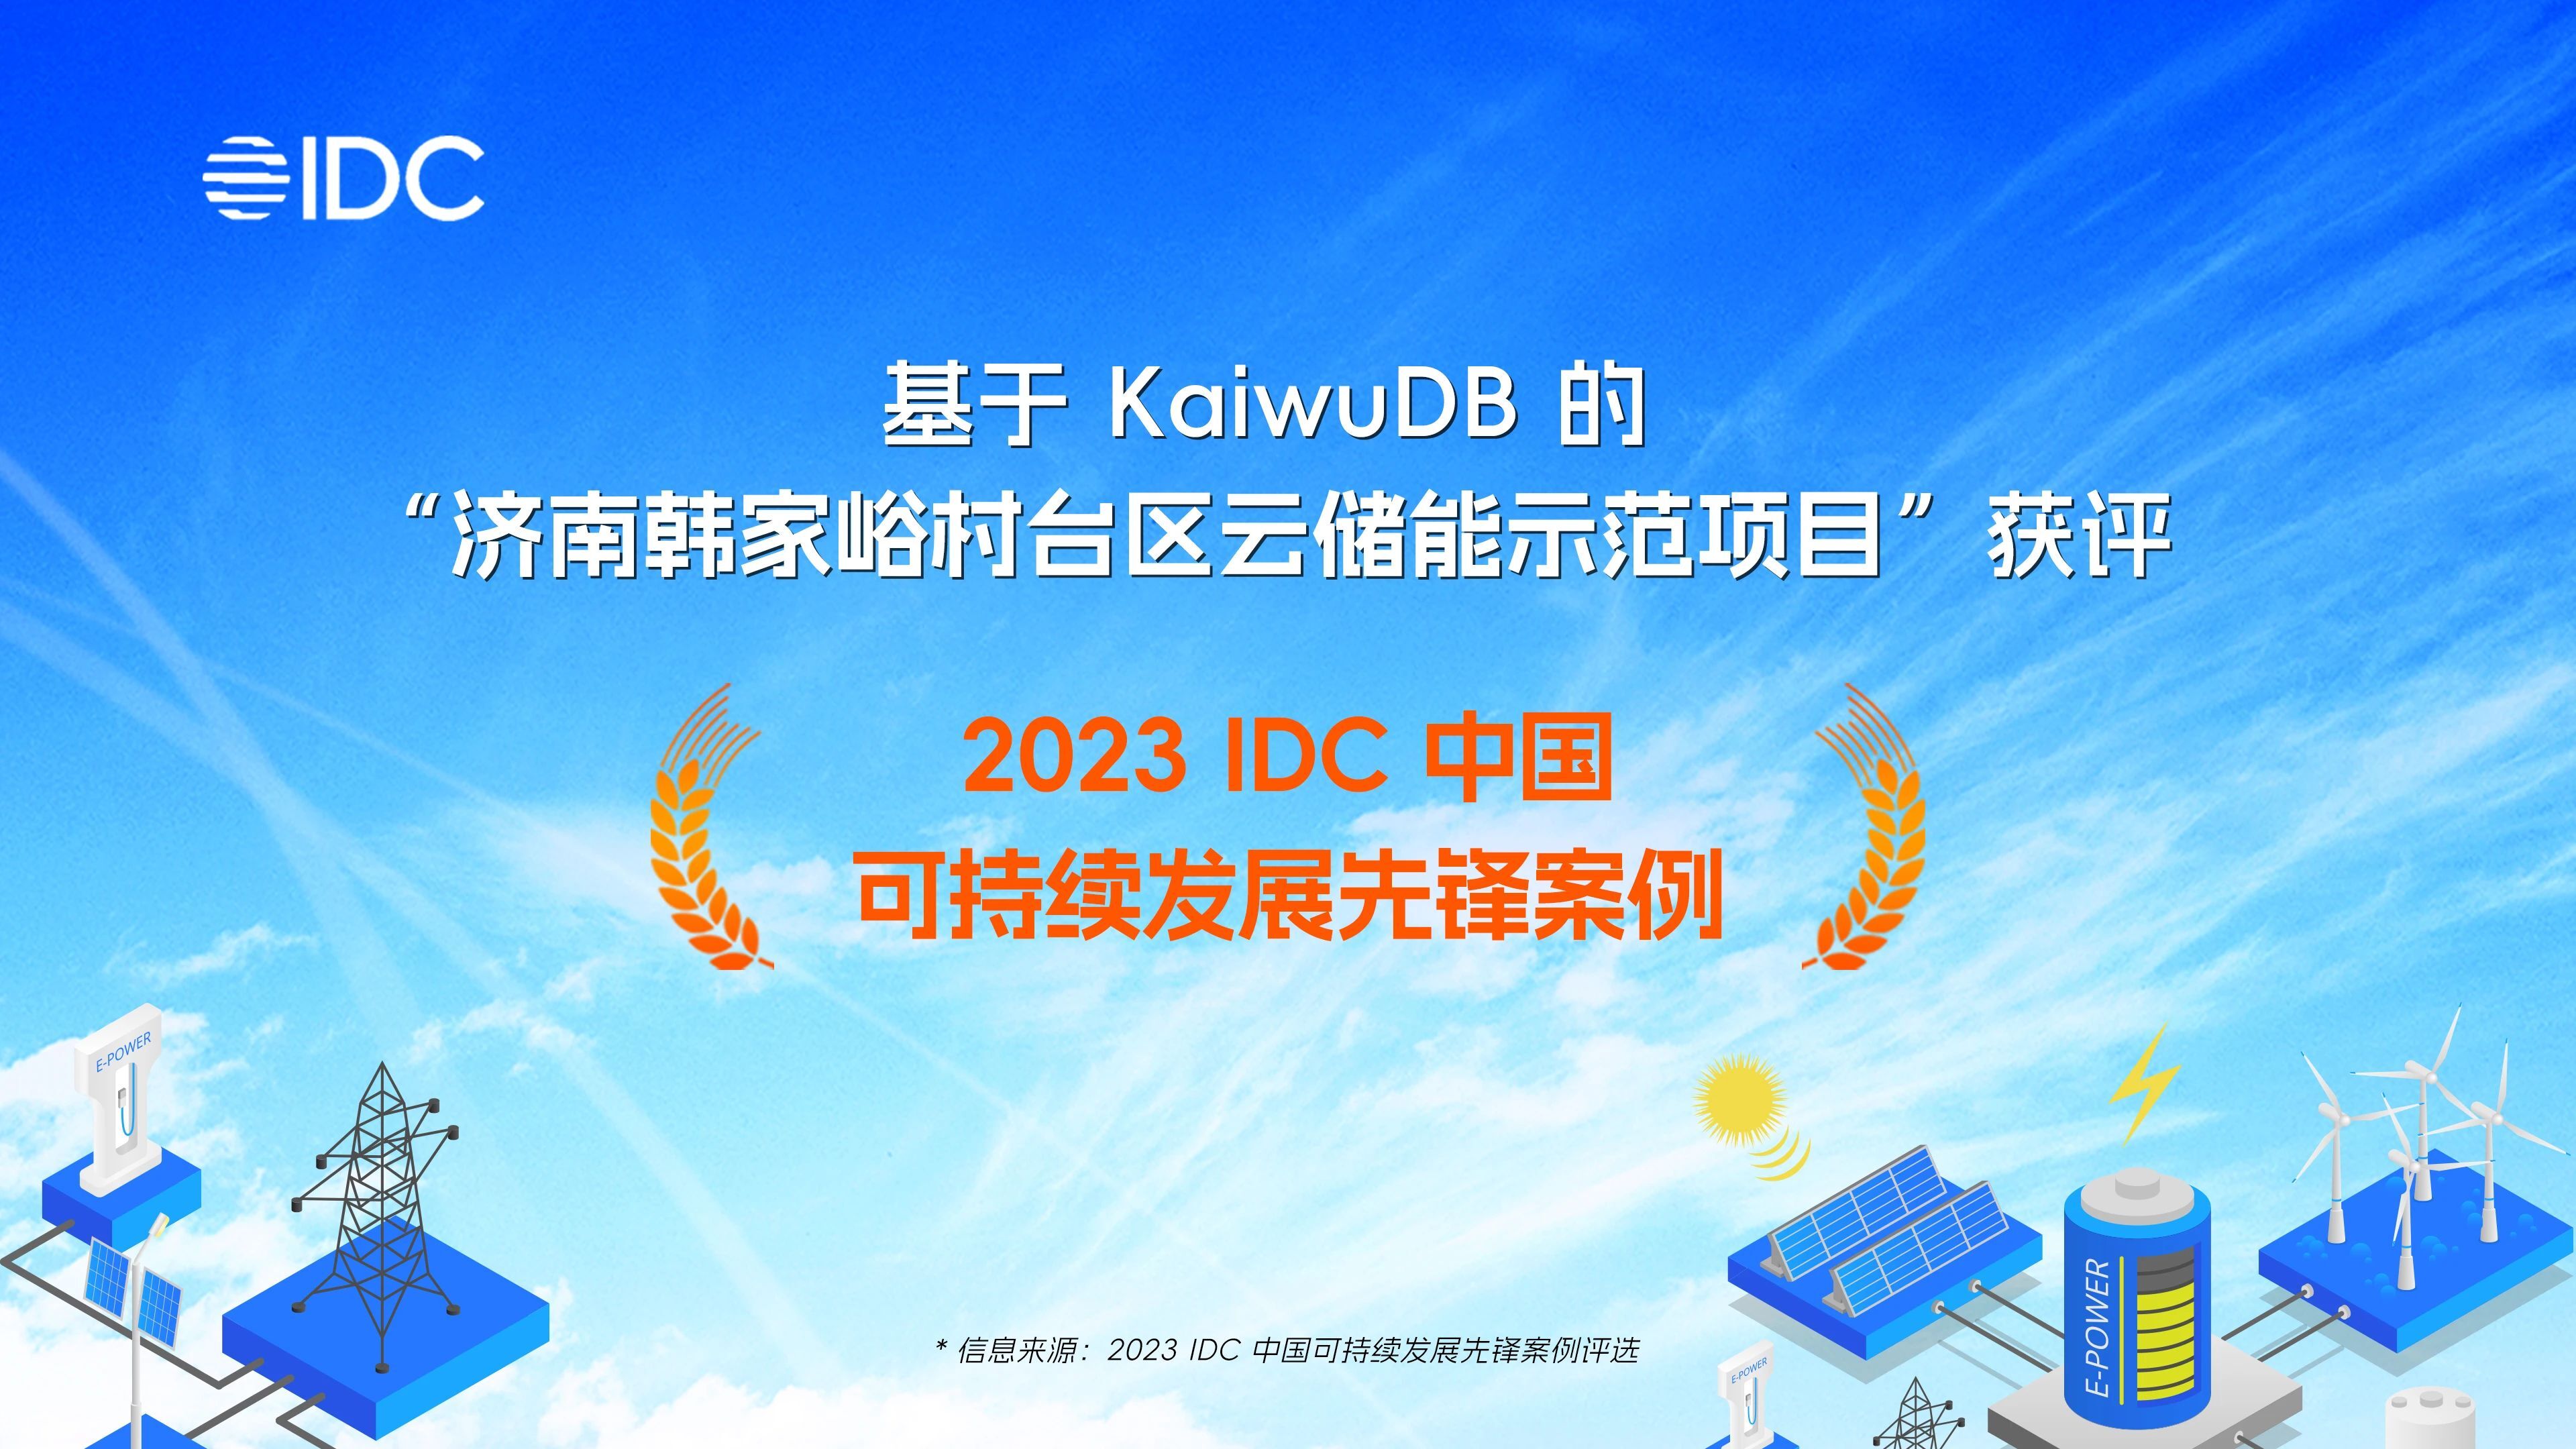 KaiwuDB 荣获“2023 IDC 中国可持续发展先锋案例”